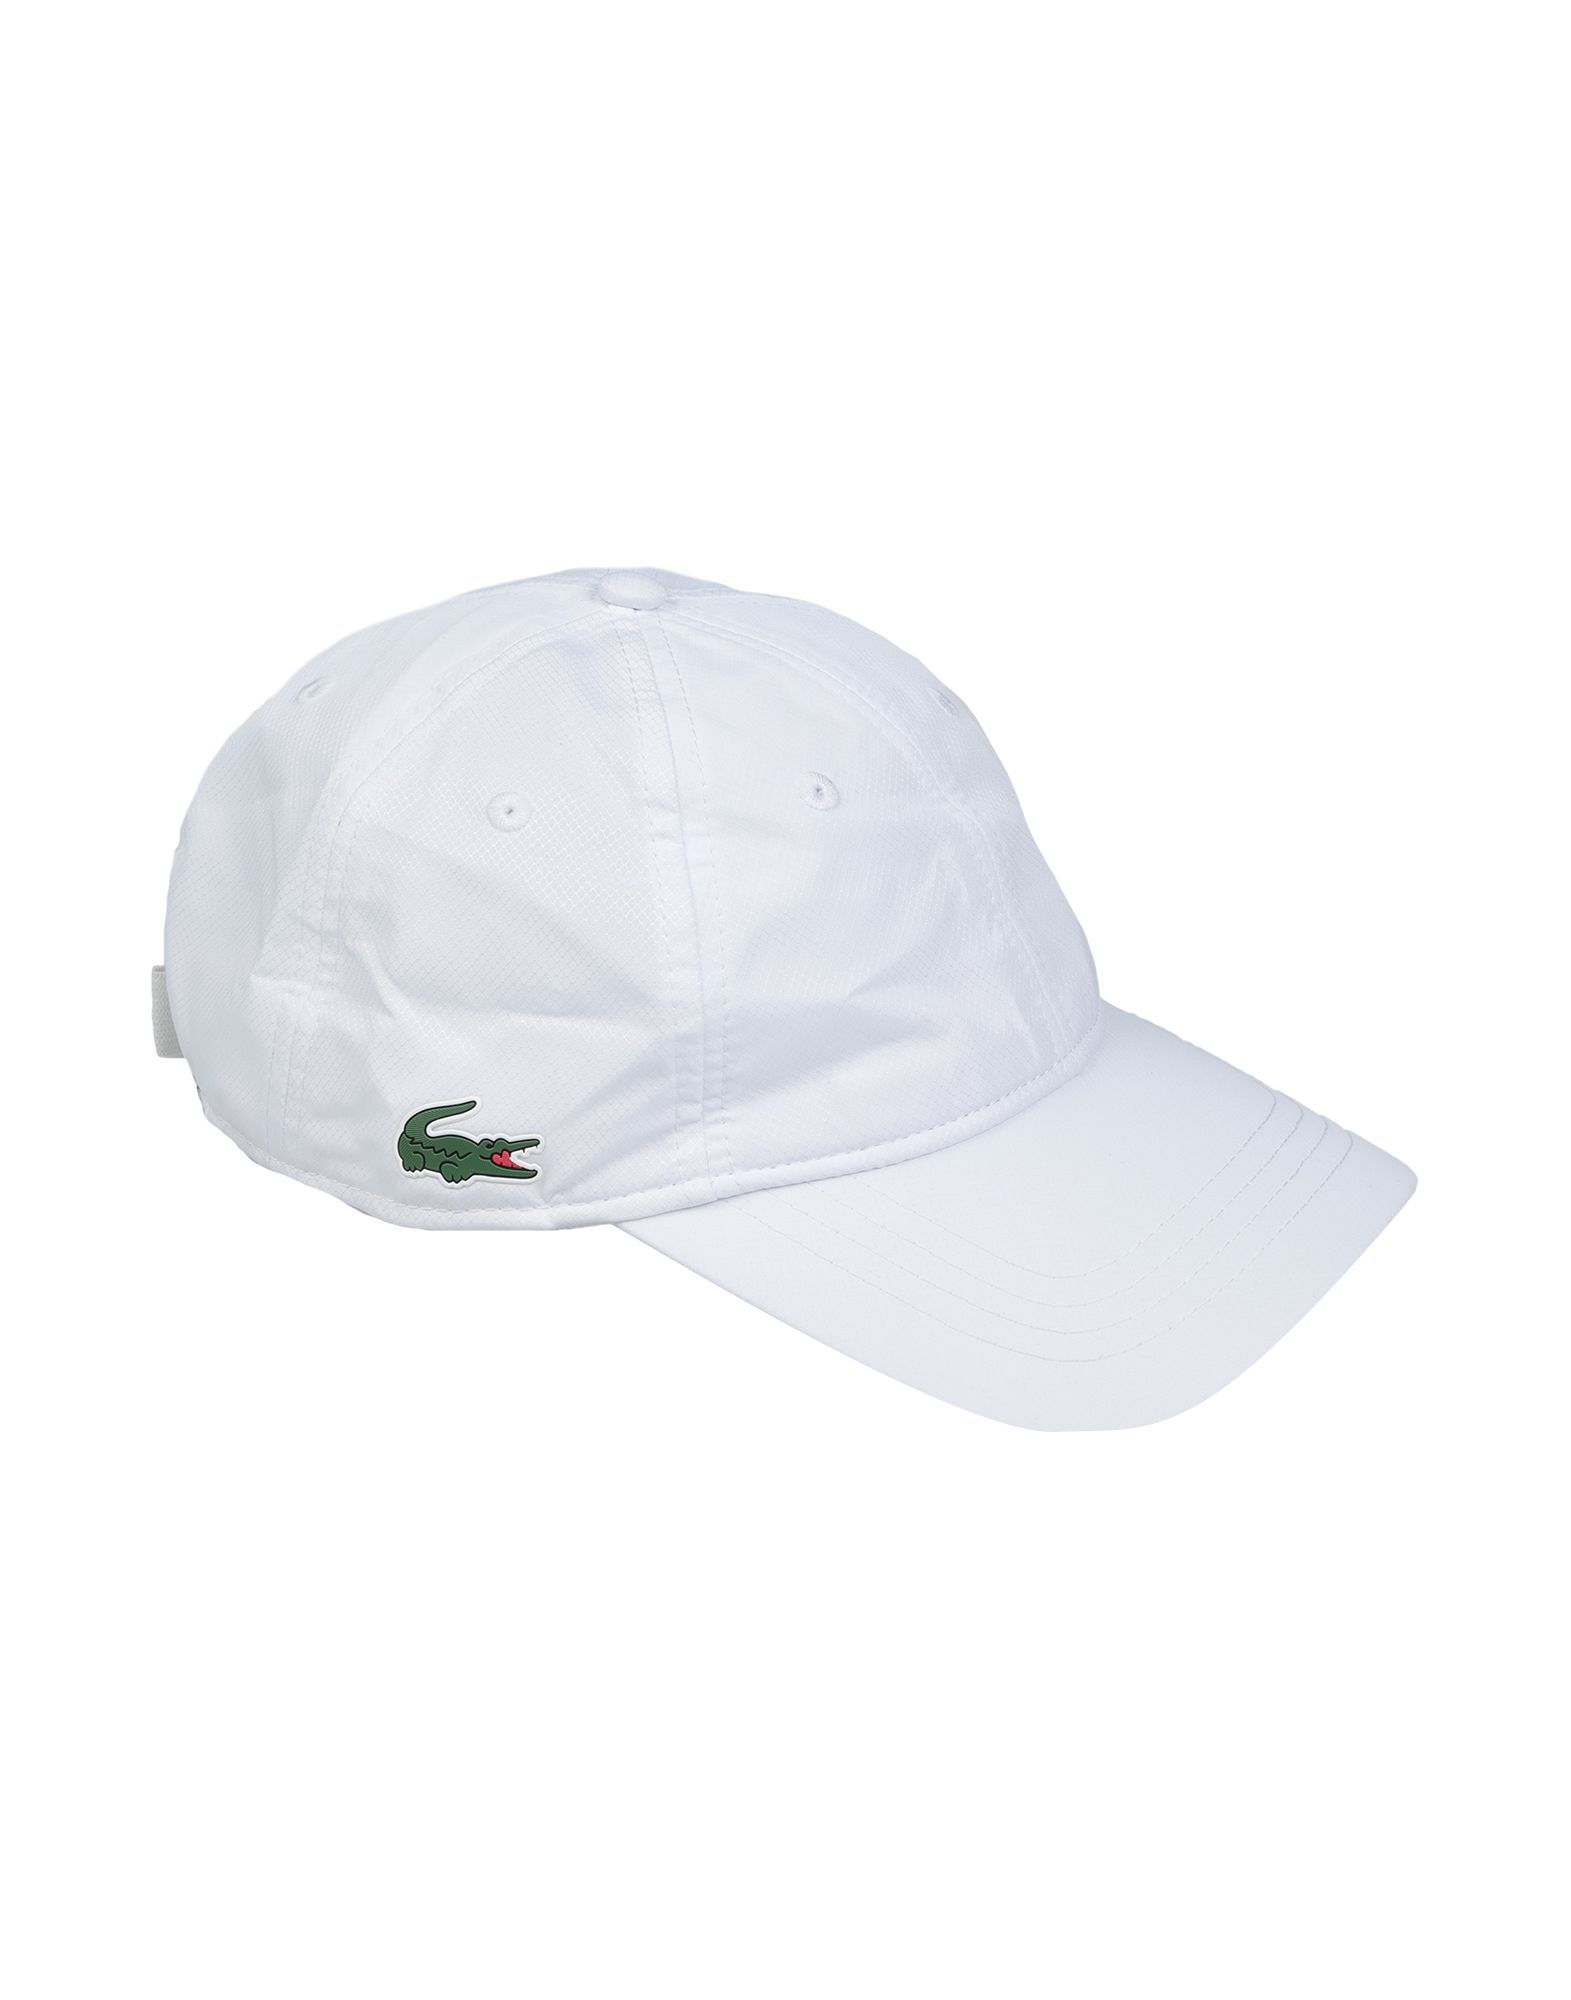 white lacoste hat